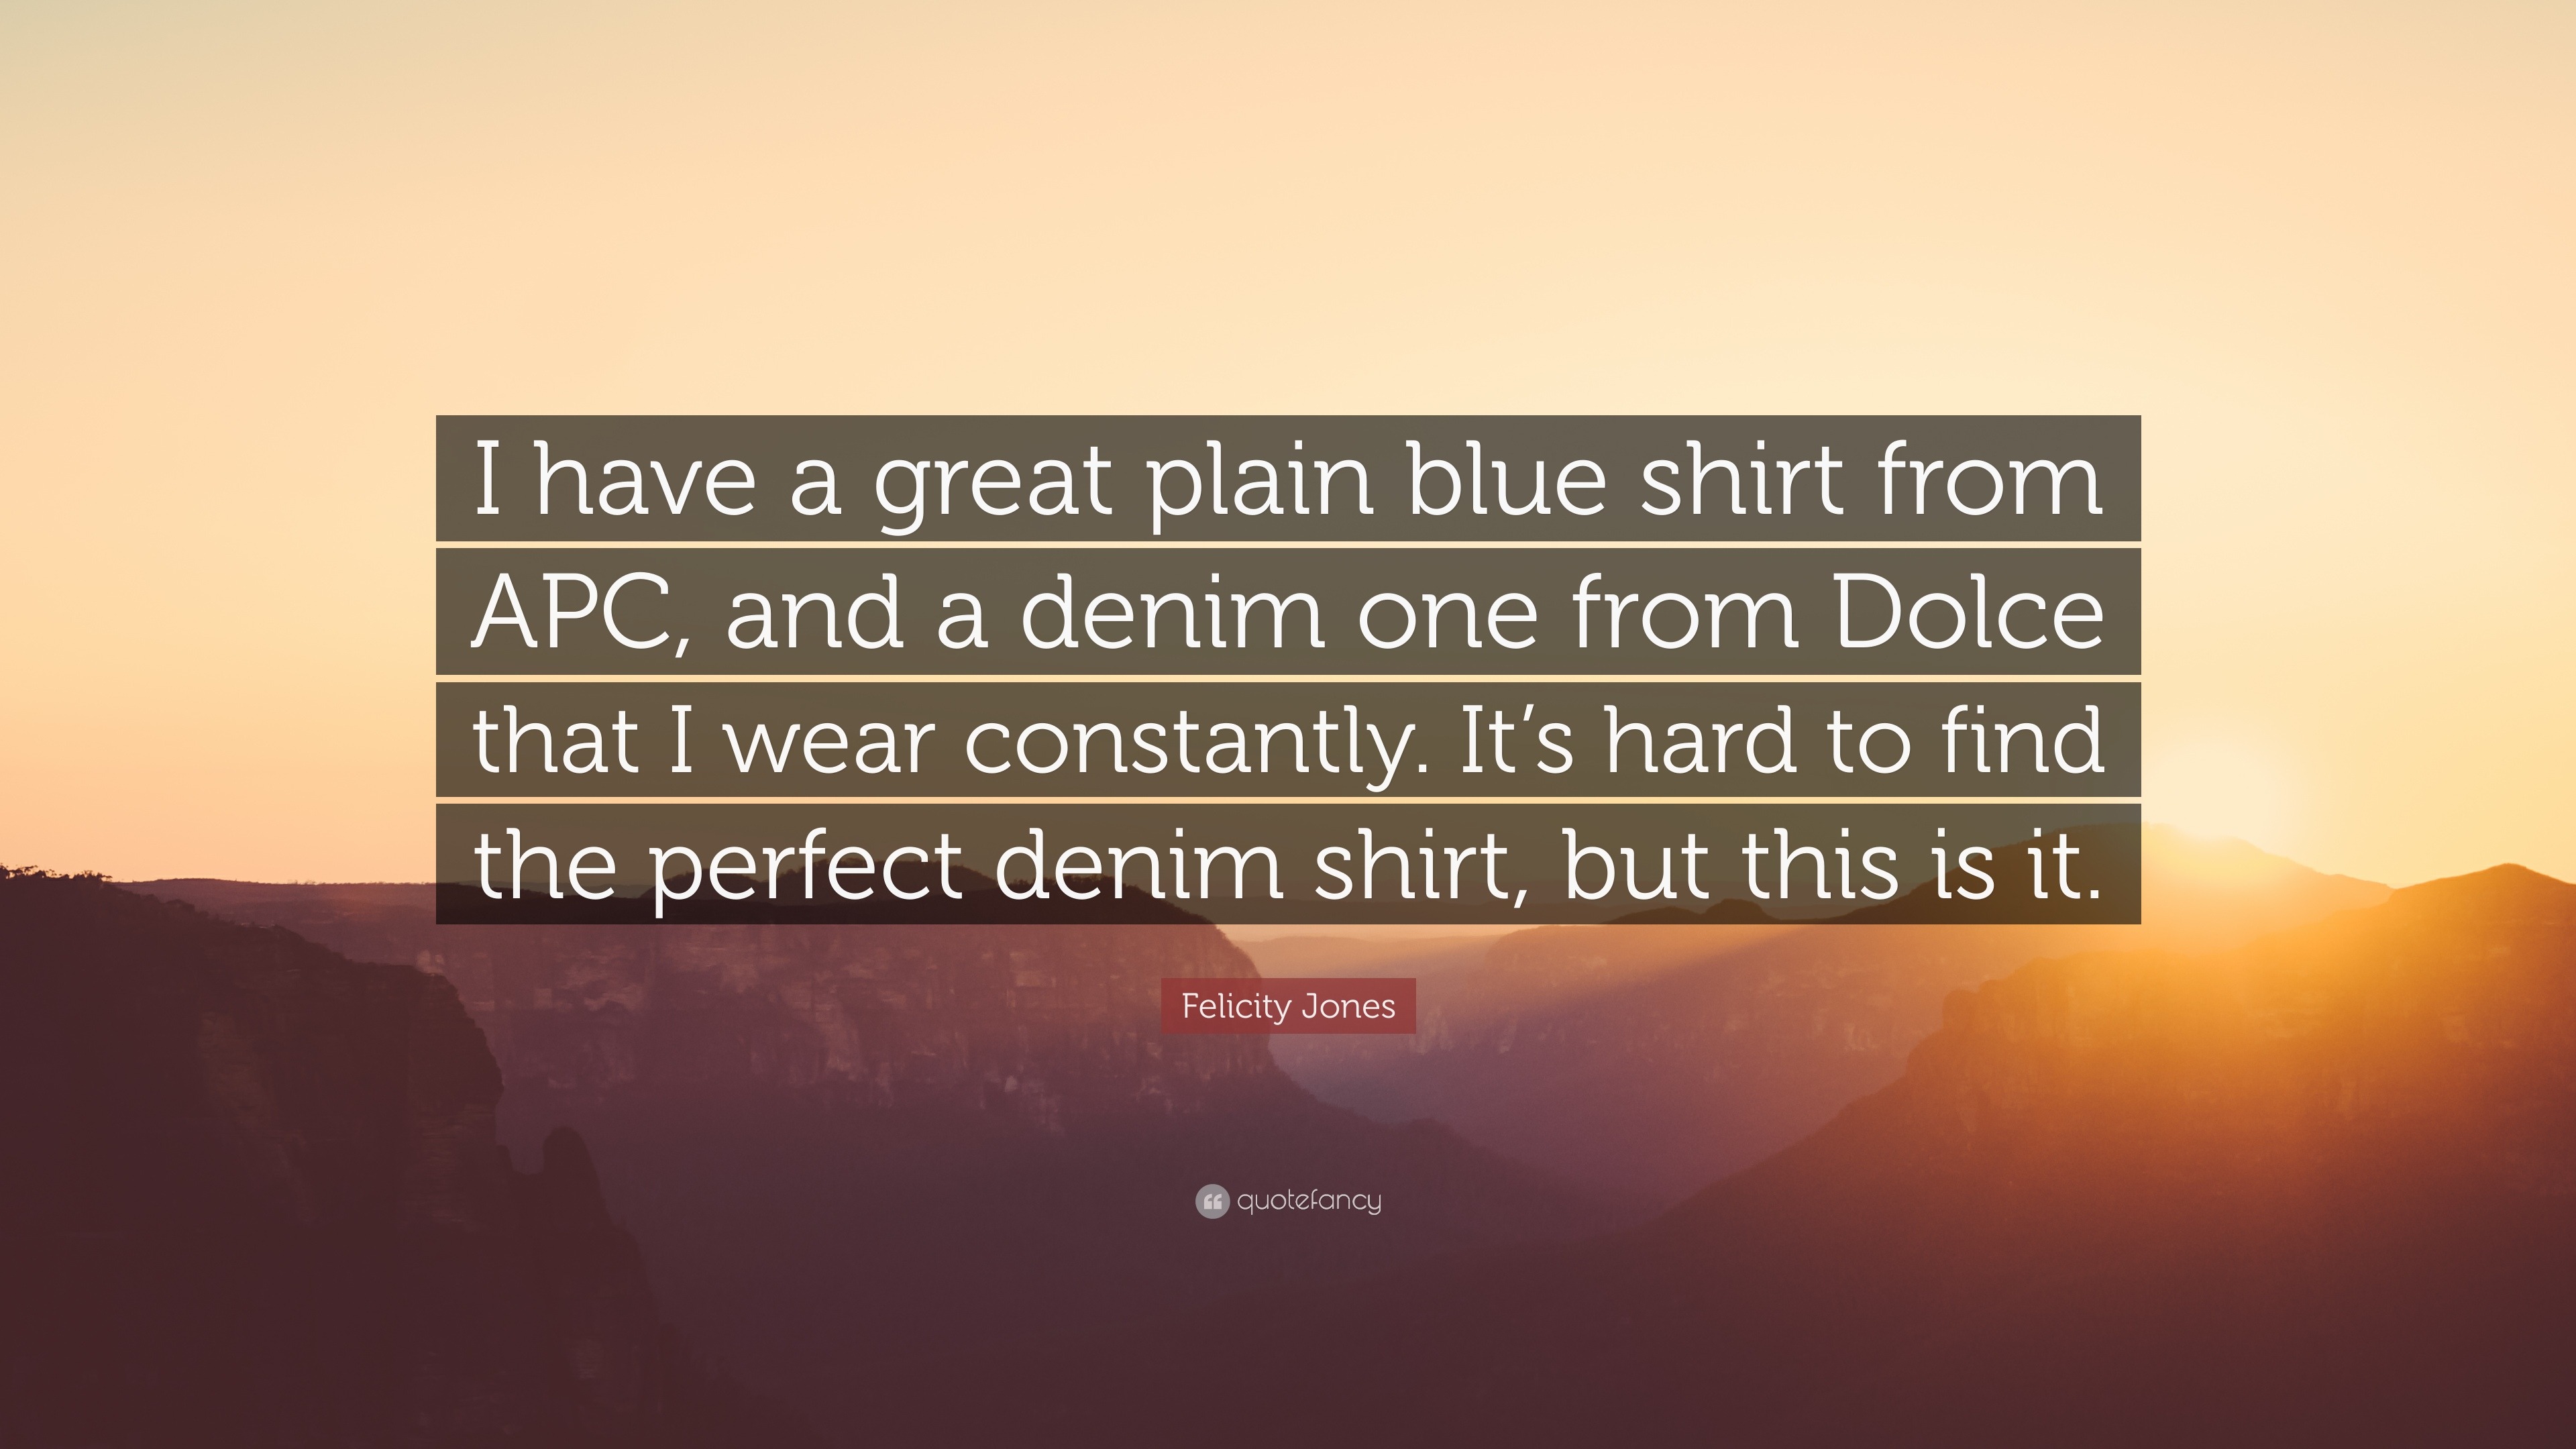 Denim Shirt Men - Dark Blue Mens Shirts Manufacturers at Rs 250 in Surat